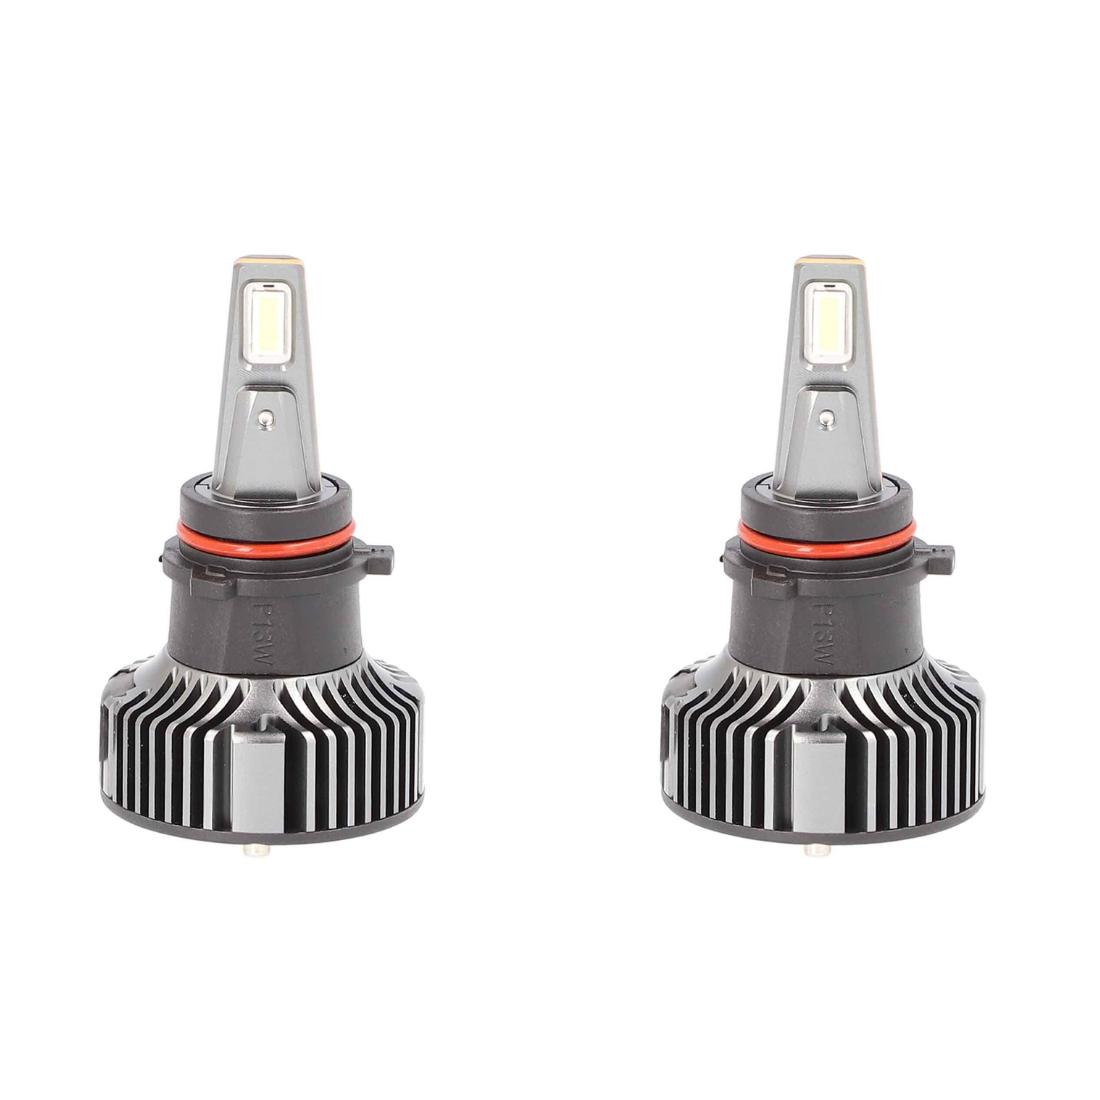 Heise HE-P13PRO HE-P13 PRO Series Single Beam Replacement Headlight LED Bulb Kit